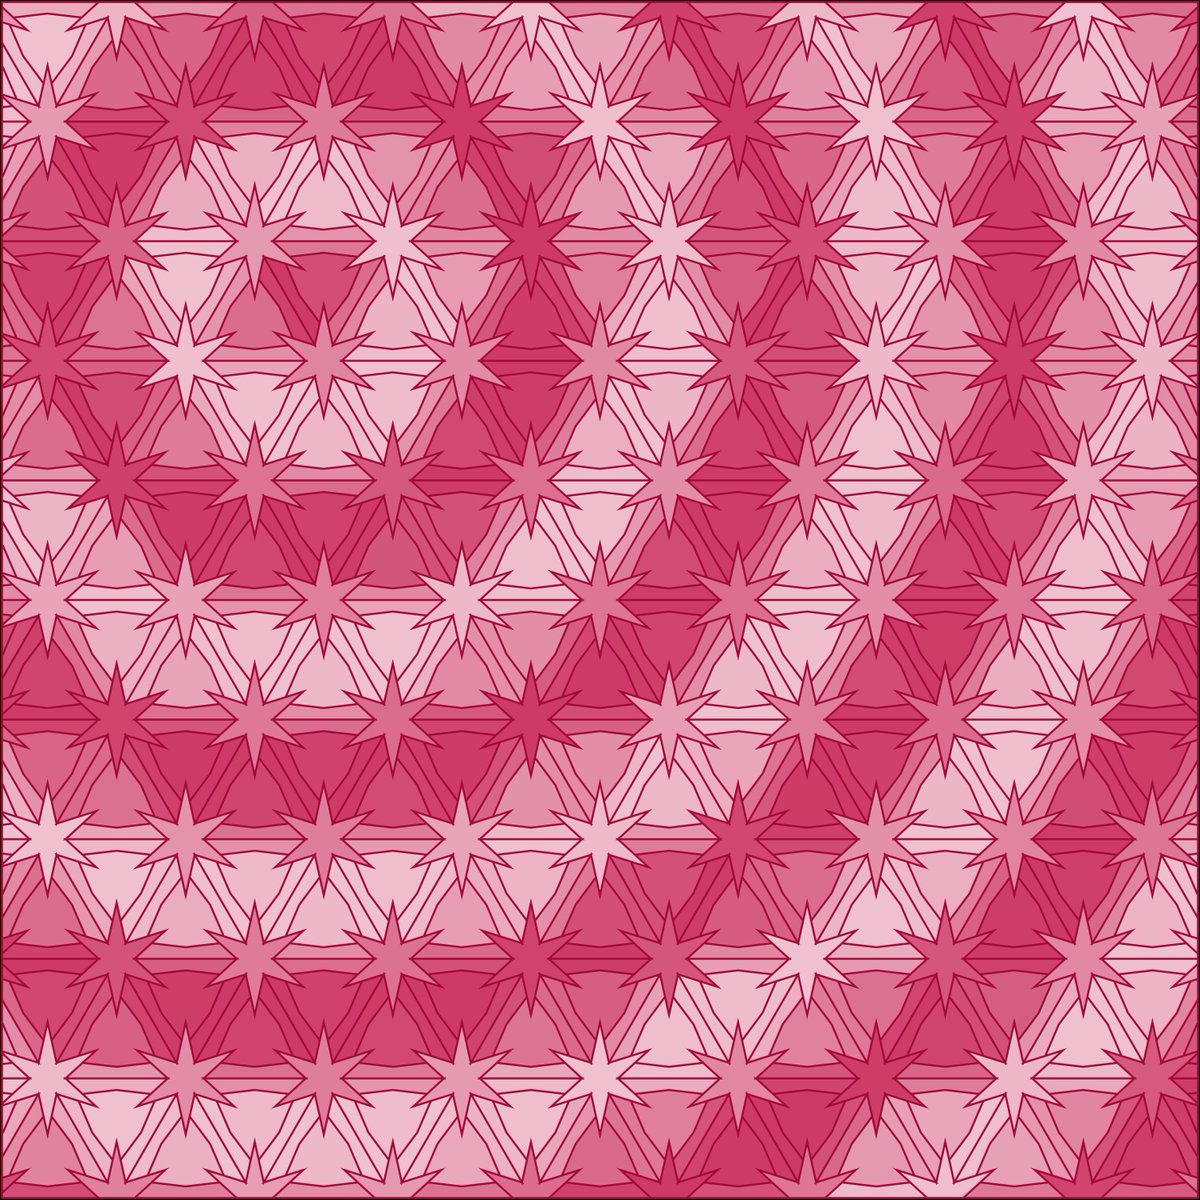 Offset from center circular gradient! #comingsoon #new #feature #polygons #art #math #symmetry #design #gradient #tessellation #textile #fabric #surface #geometric #geometricart #geometricjuly